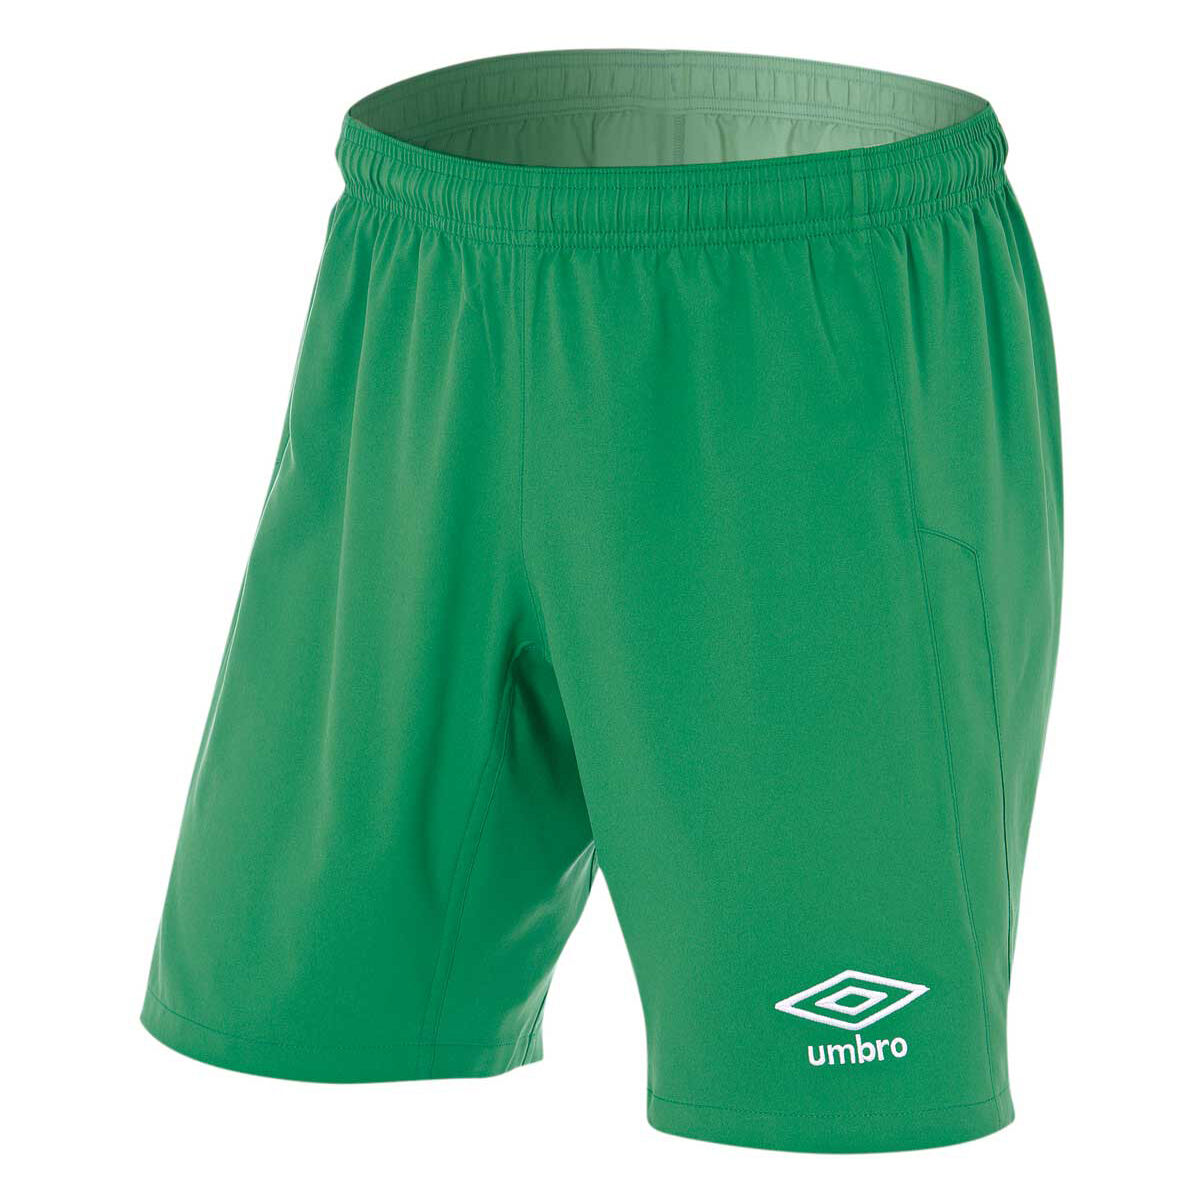 green umbro shorts